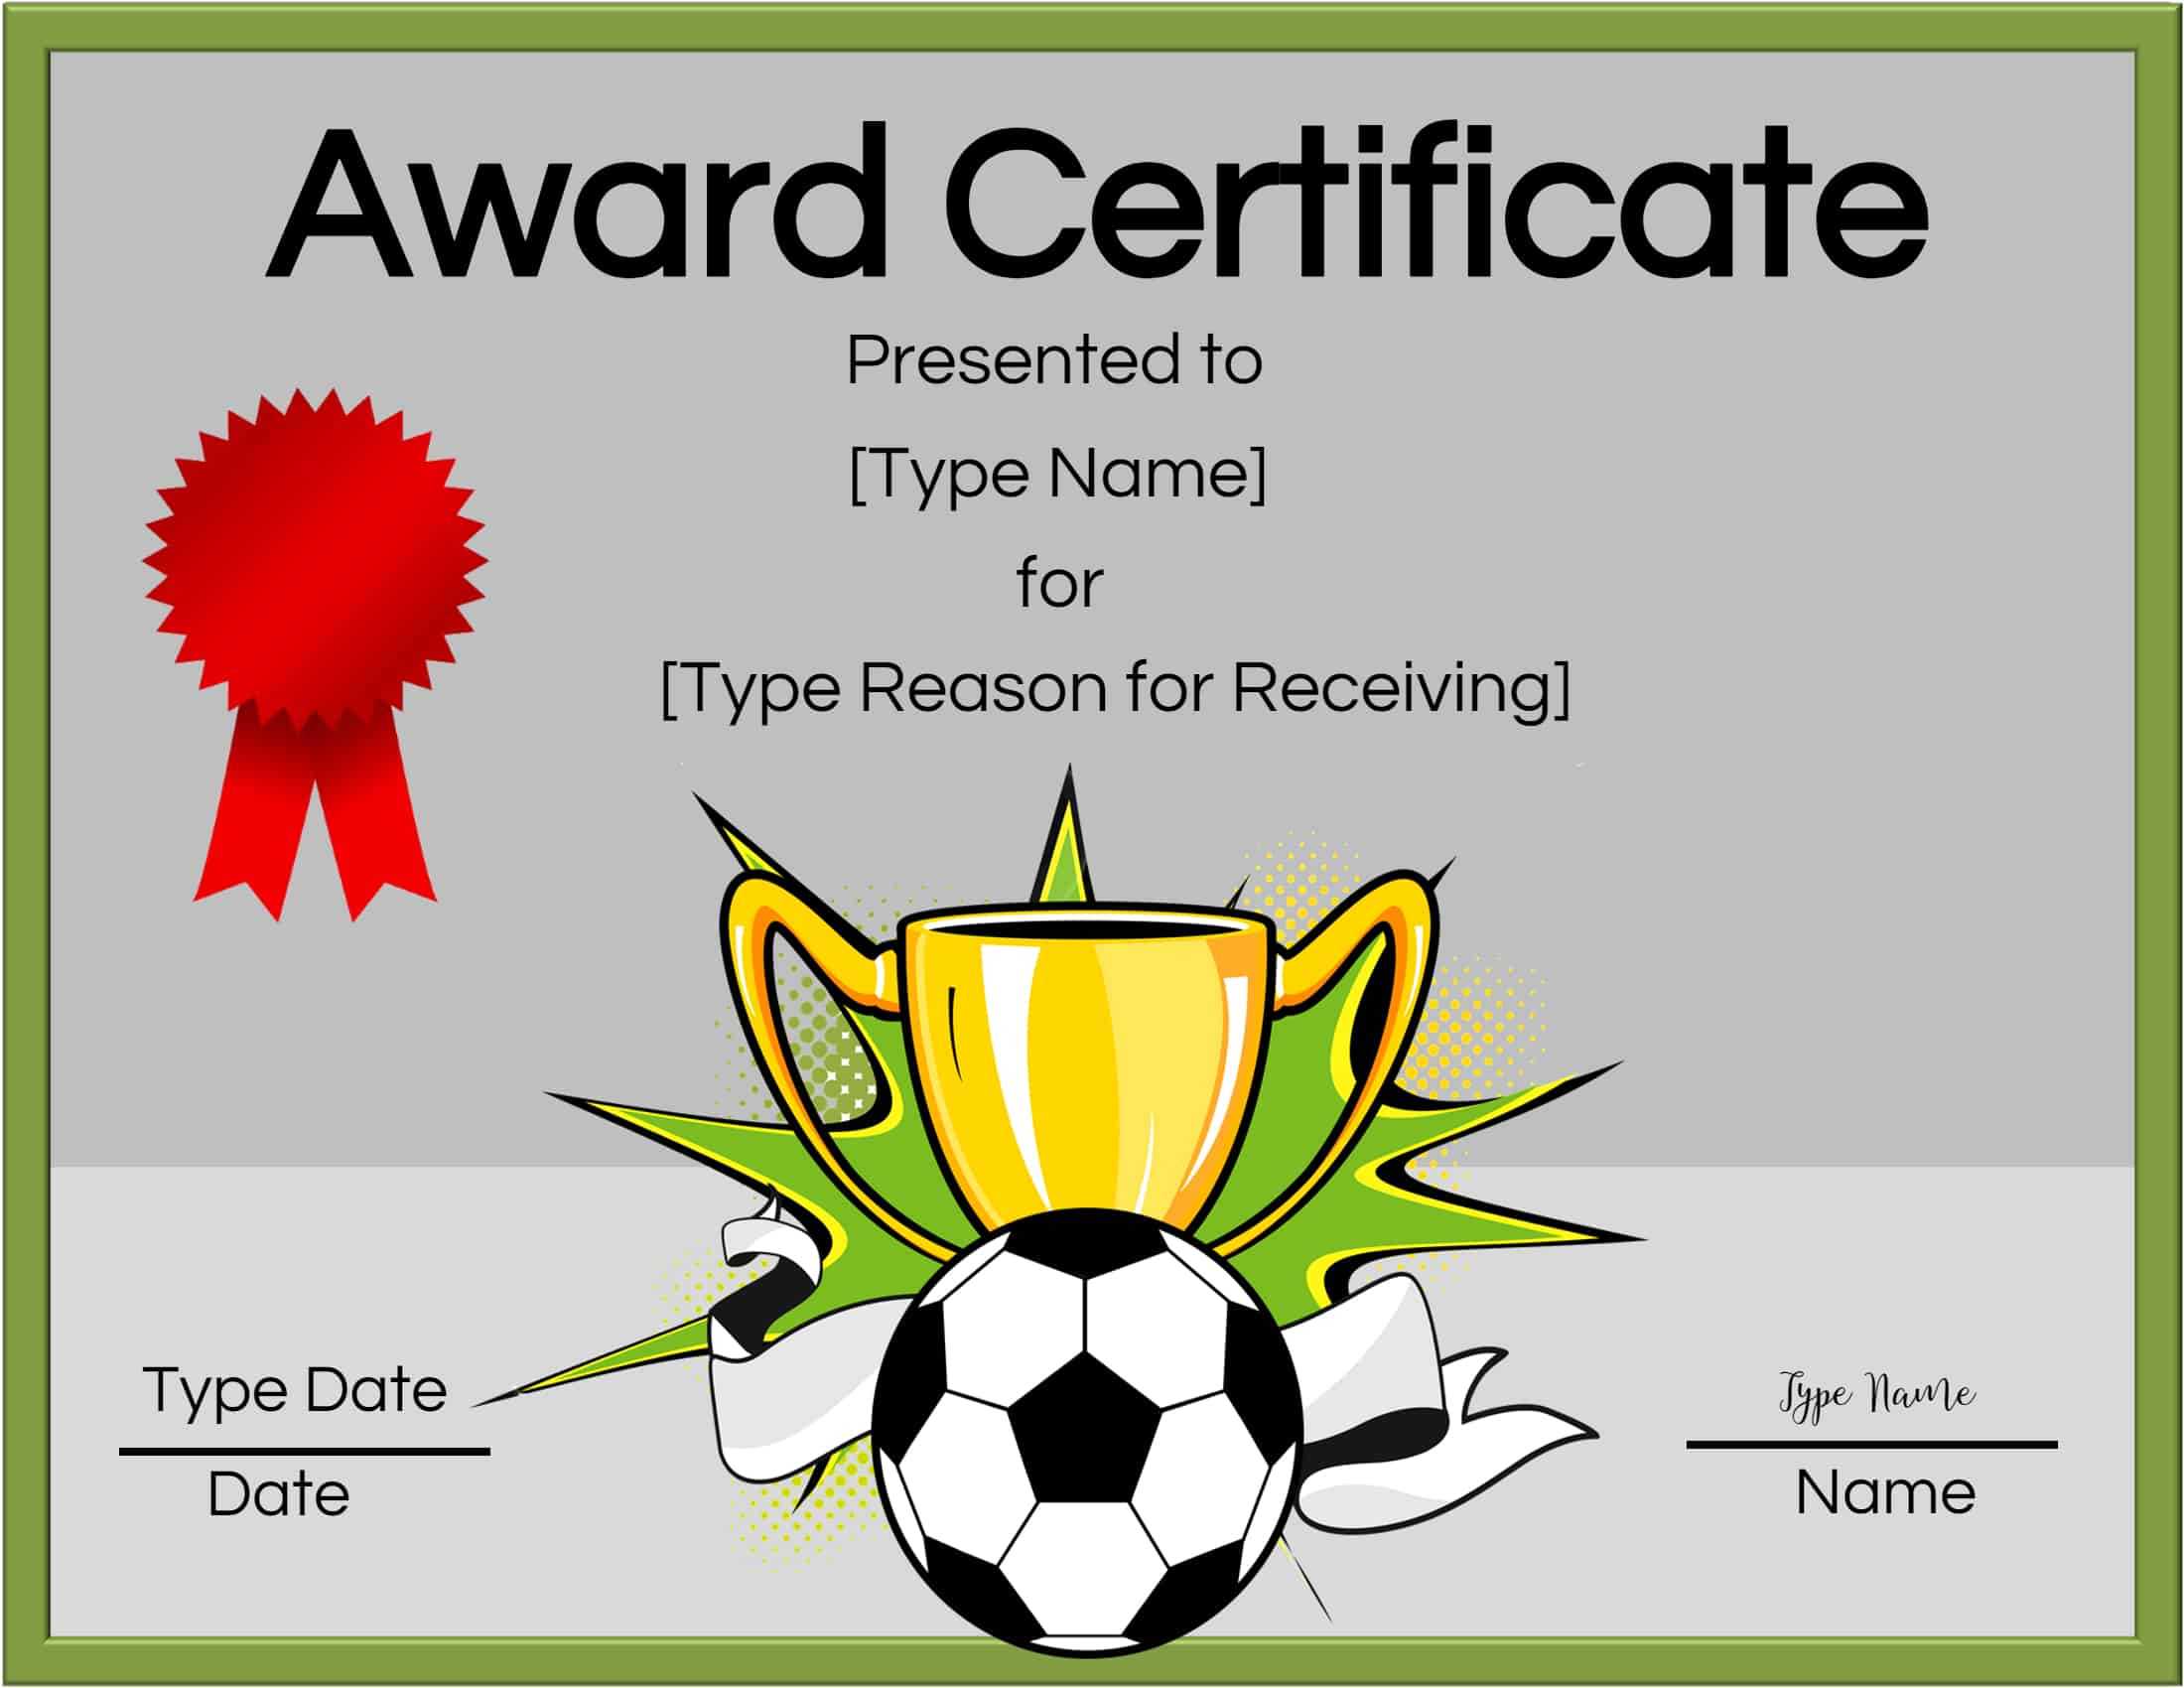 Free Soccer Certificate Maker | Edit Online And Print At Home Regarding Soccer Certificate Template Free